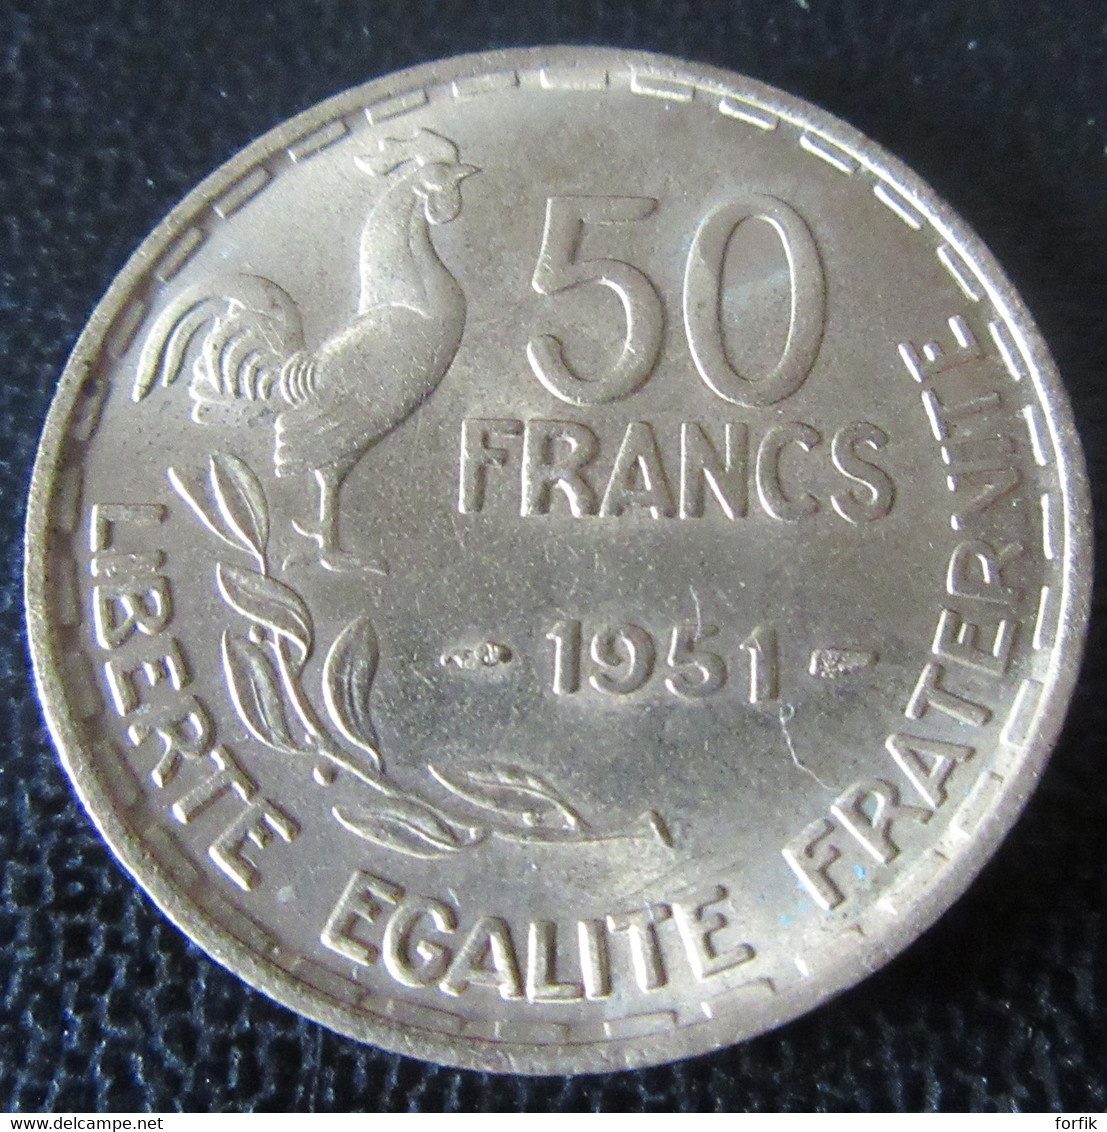 France - Monnaie 50 Francs Guiraud 1951 - SPL / FDC - 50 Francs